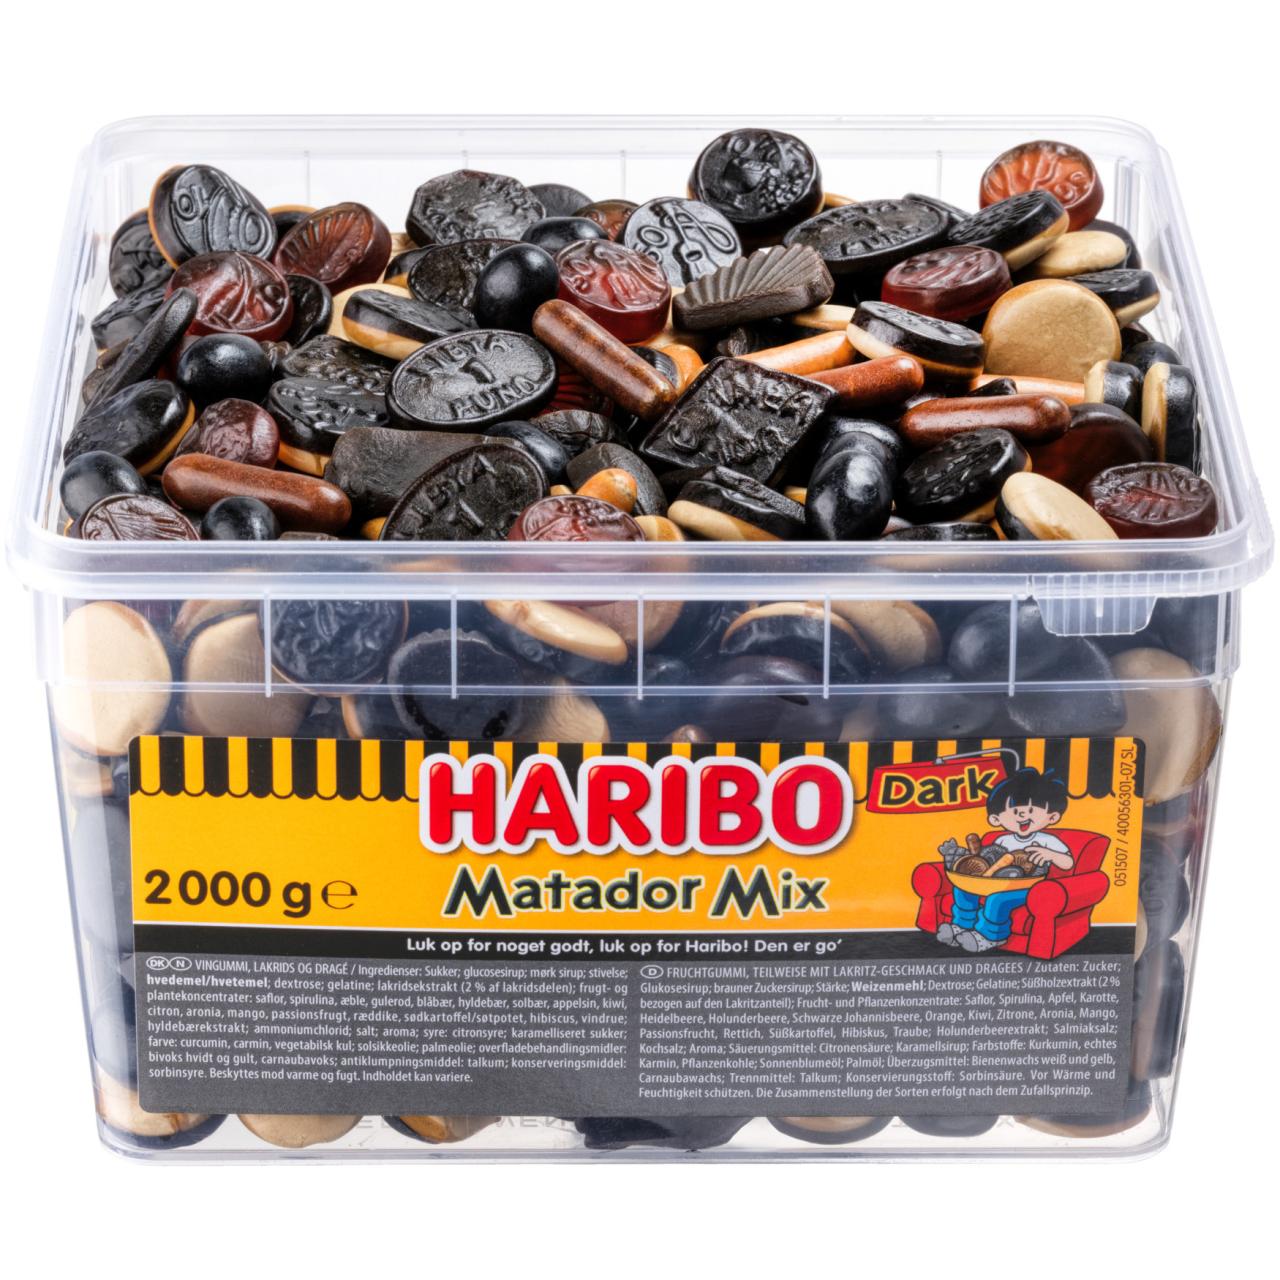 Haribo Matador Mix Dark Dose 2000g